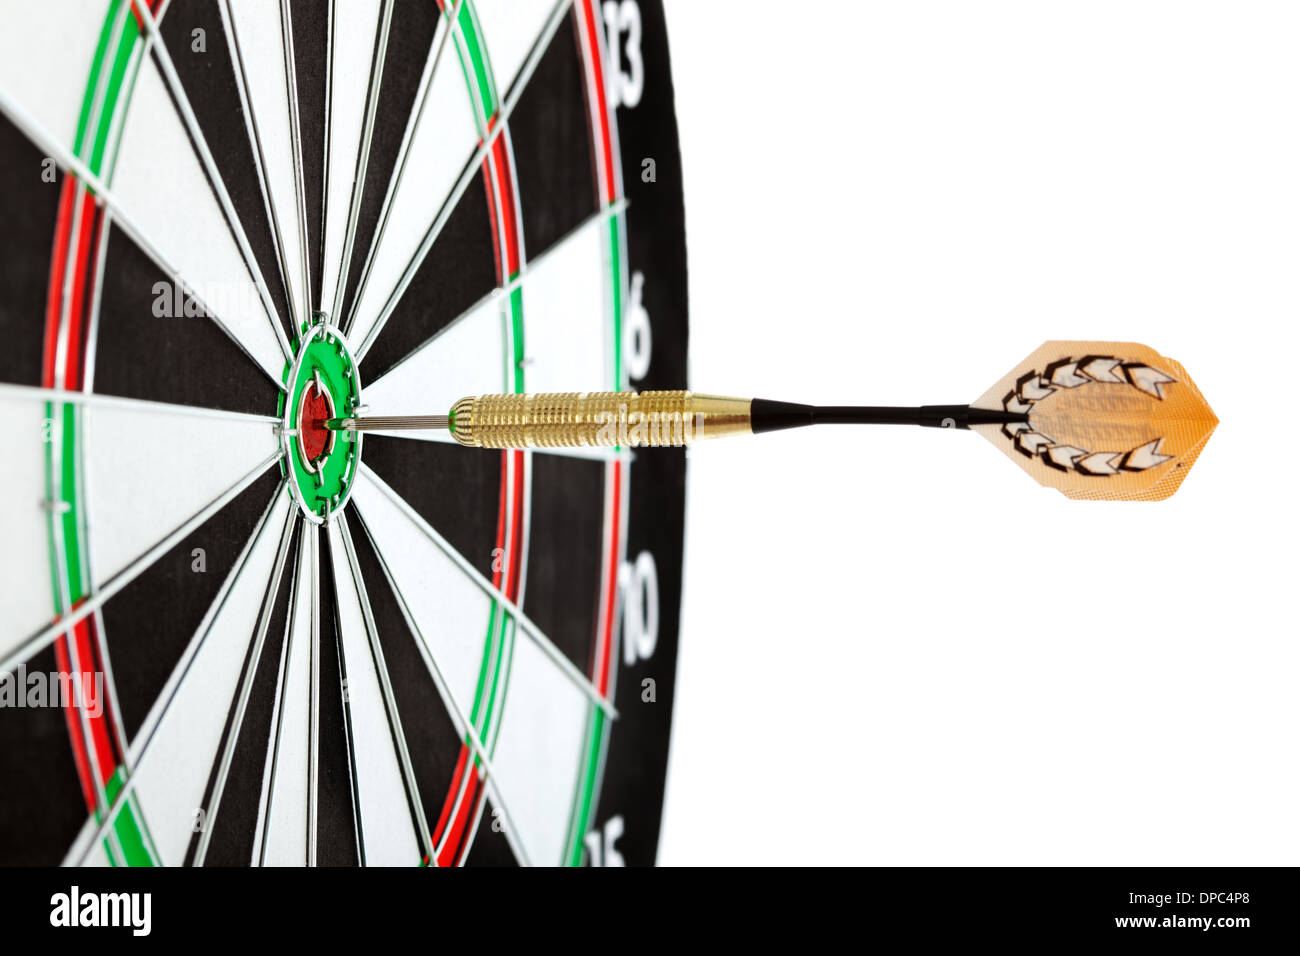 Bulls eye target with dart on white background Stock Photo